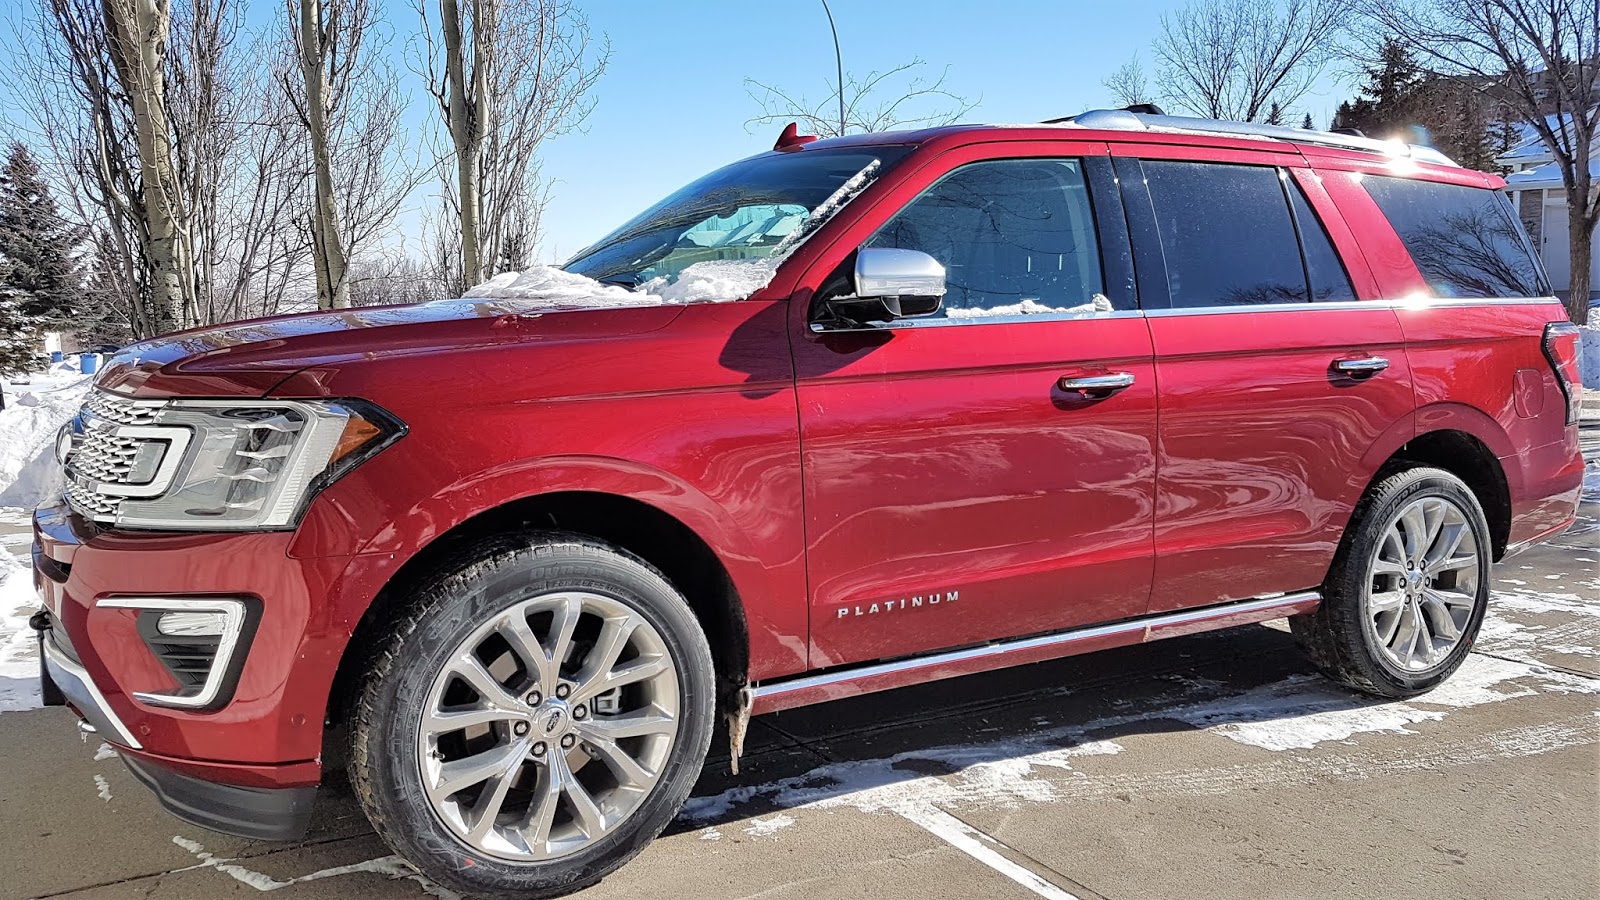  2019 Ford Expedition Platinum